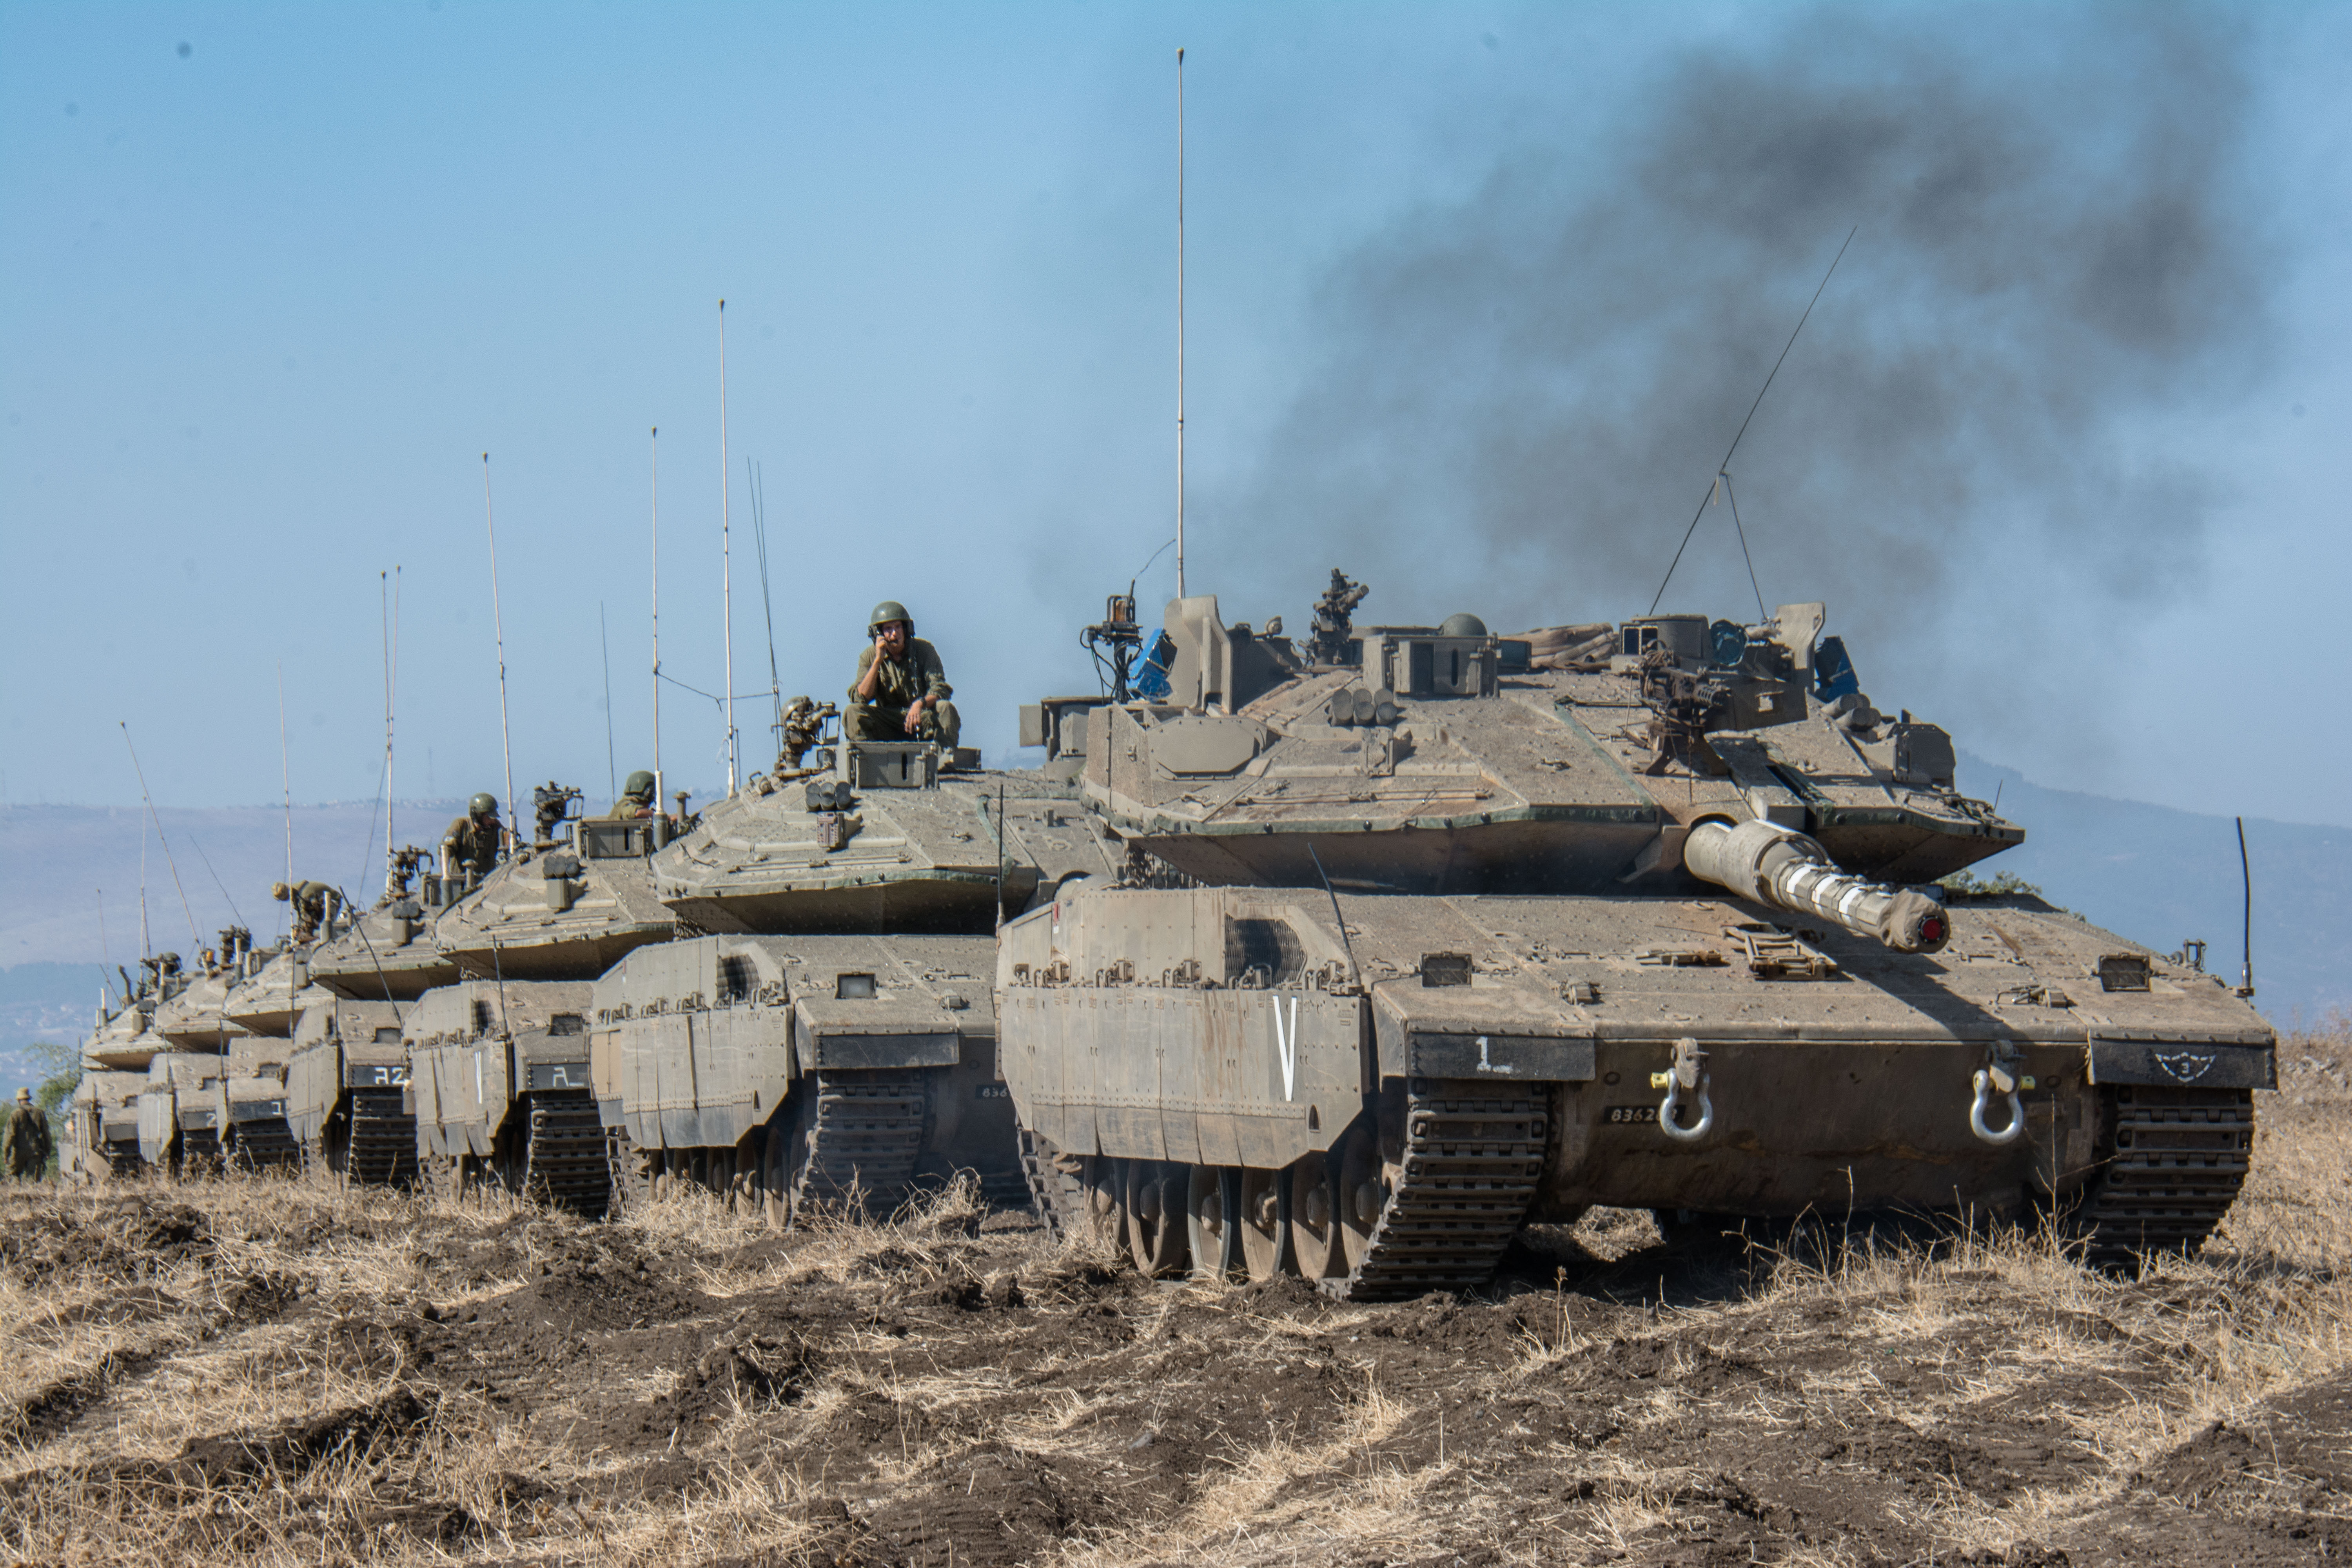 танк израиля меркава